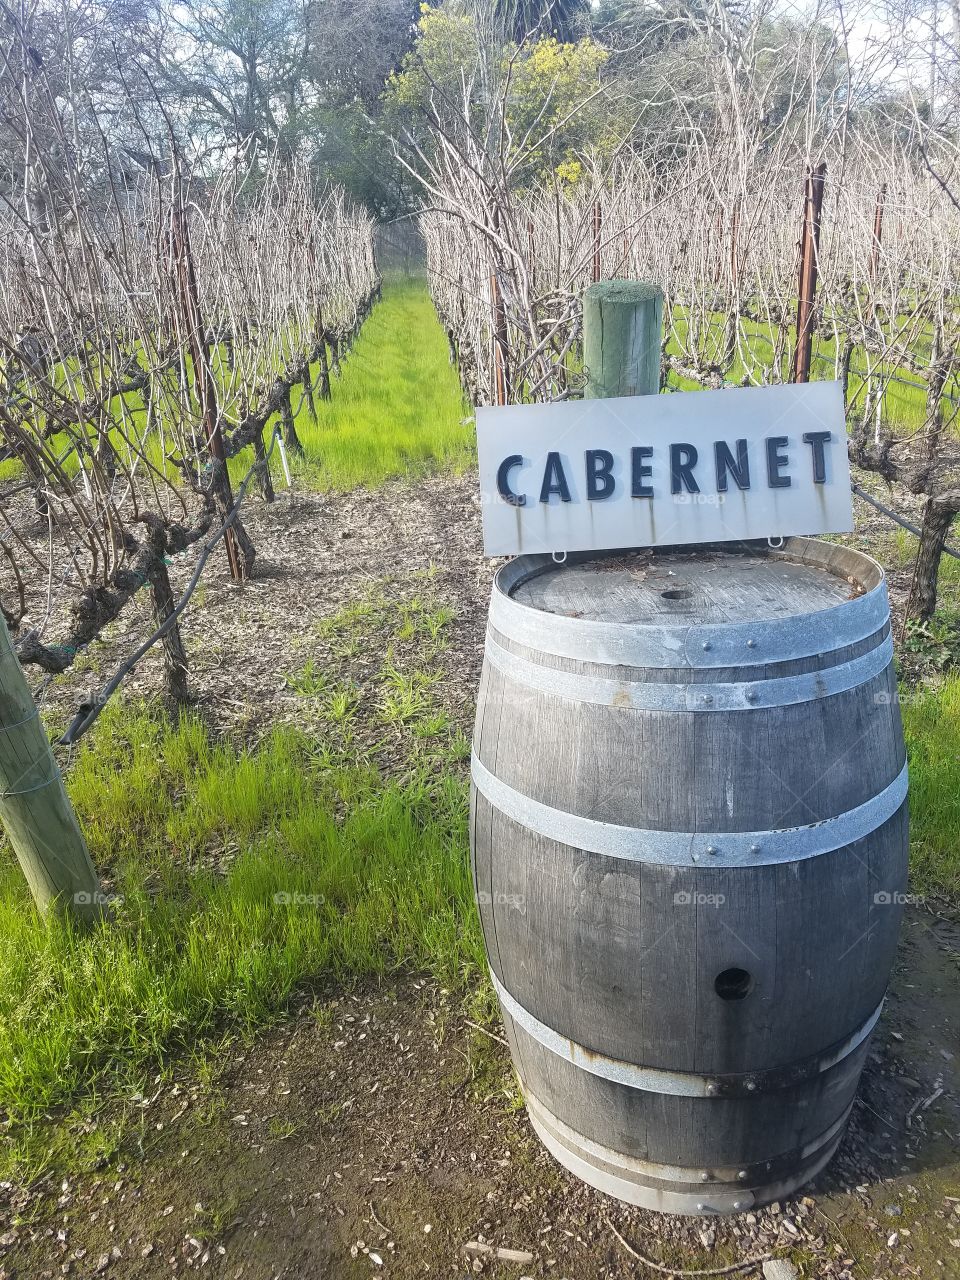 Cabernet grape vines with a distinguishing wine barrel